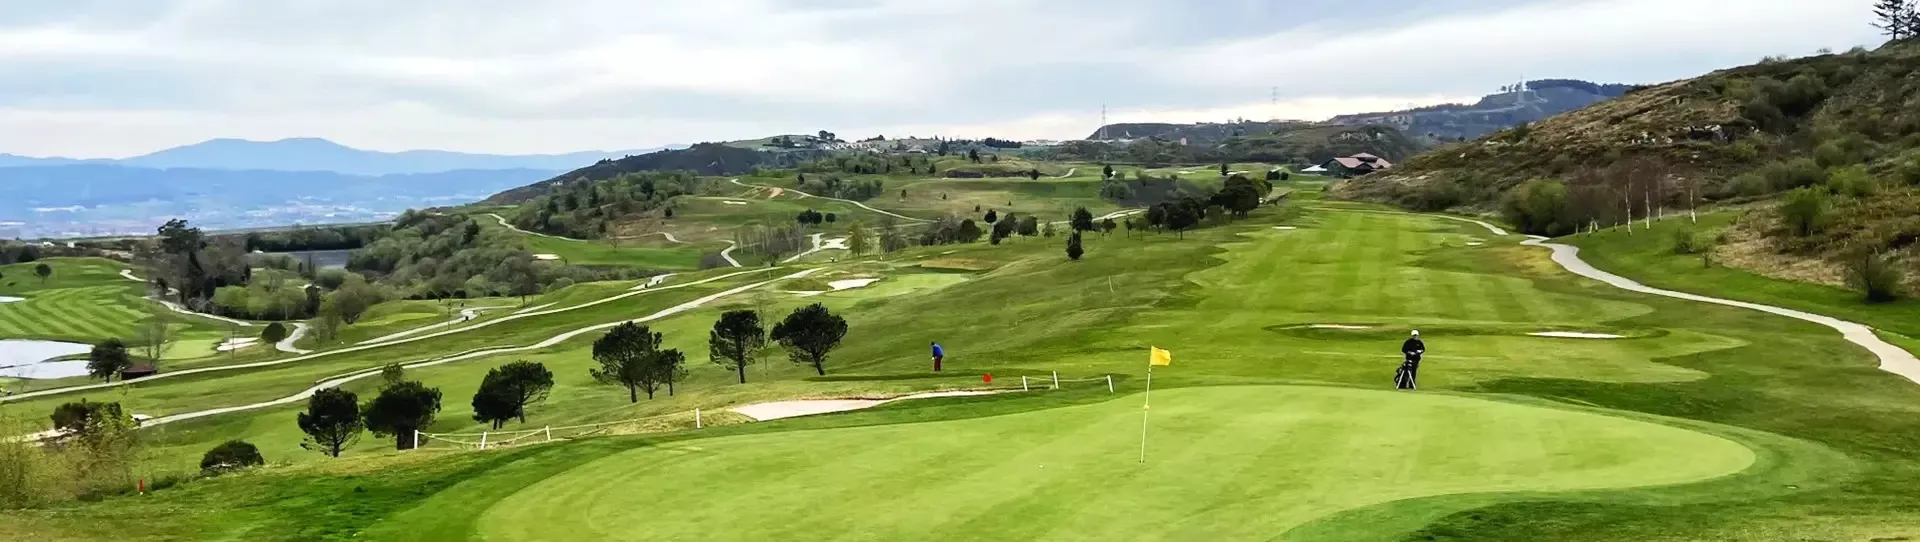 Spain golf courses - Meaztegi Golf Course - Photo 2